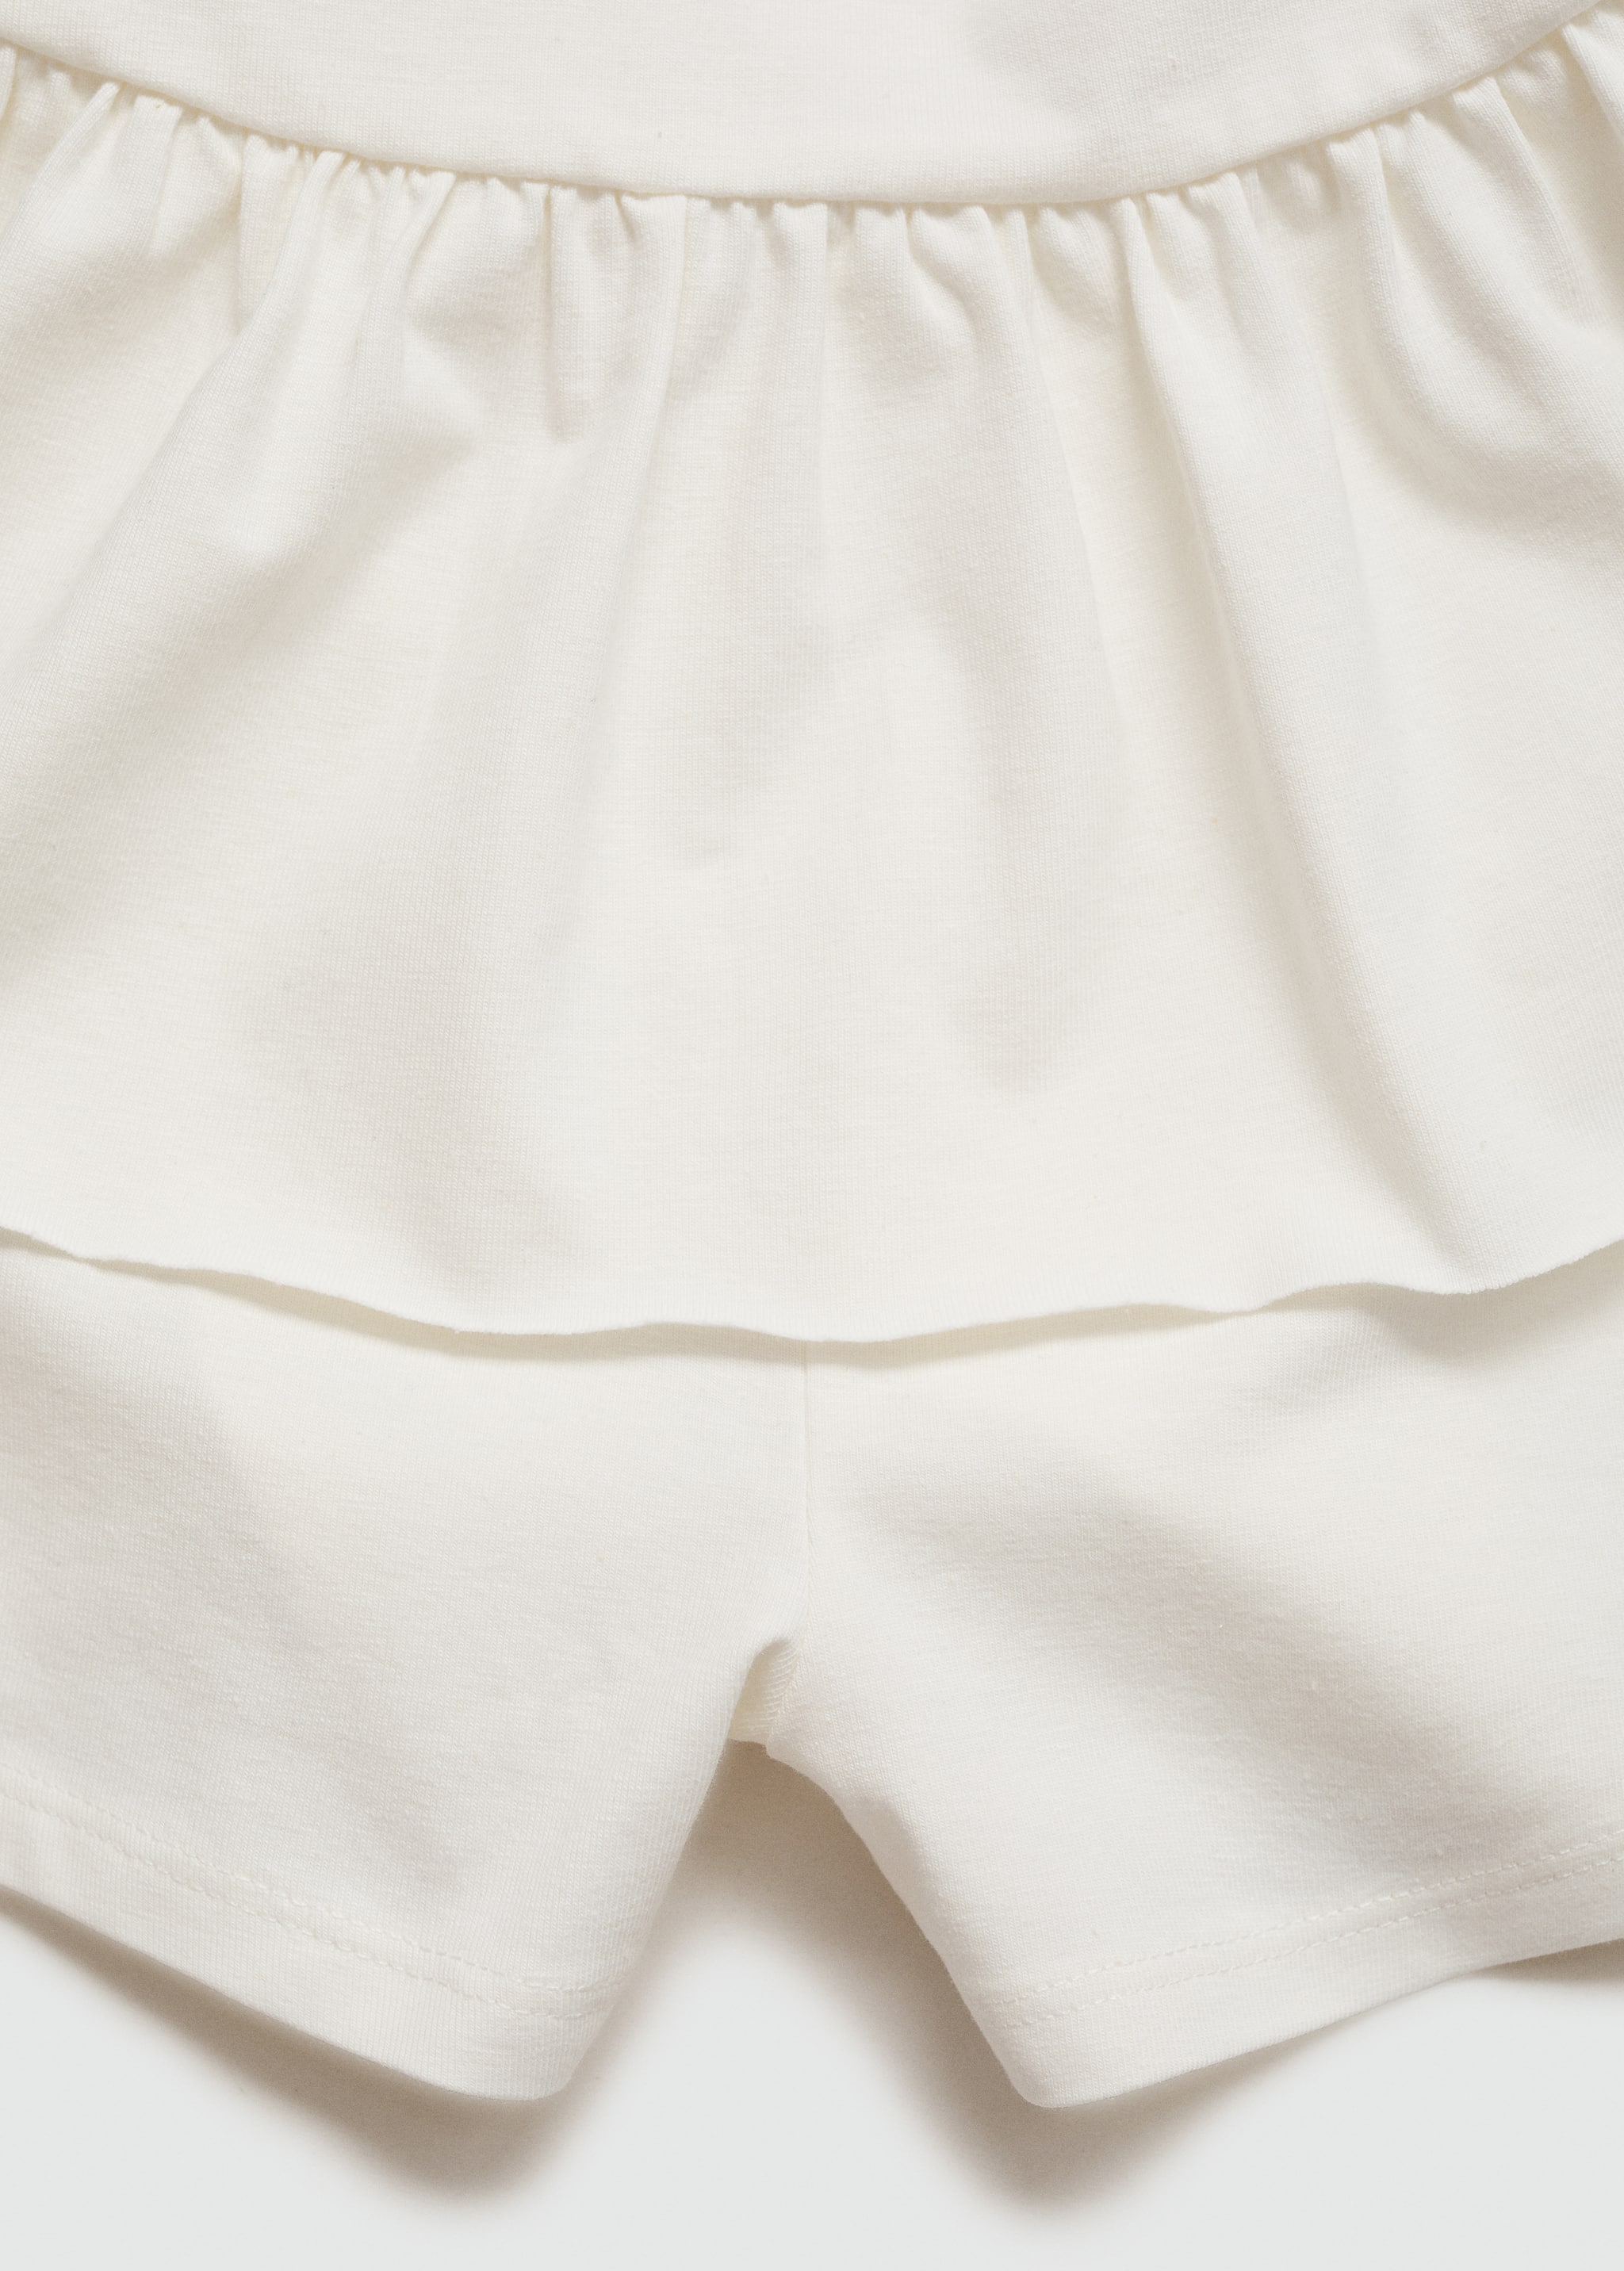 Ruffled trouser skirt - Details of the article 0